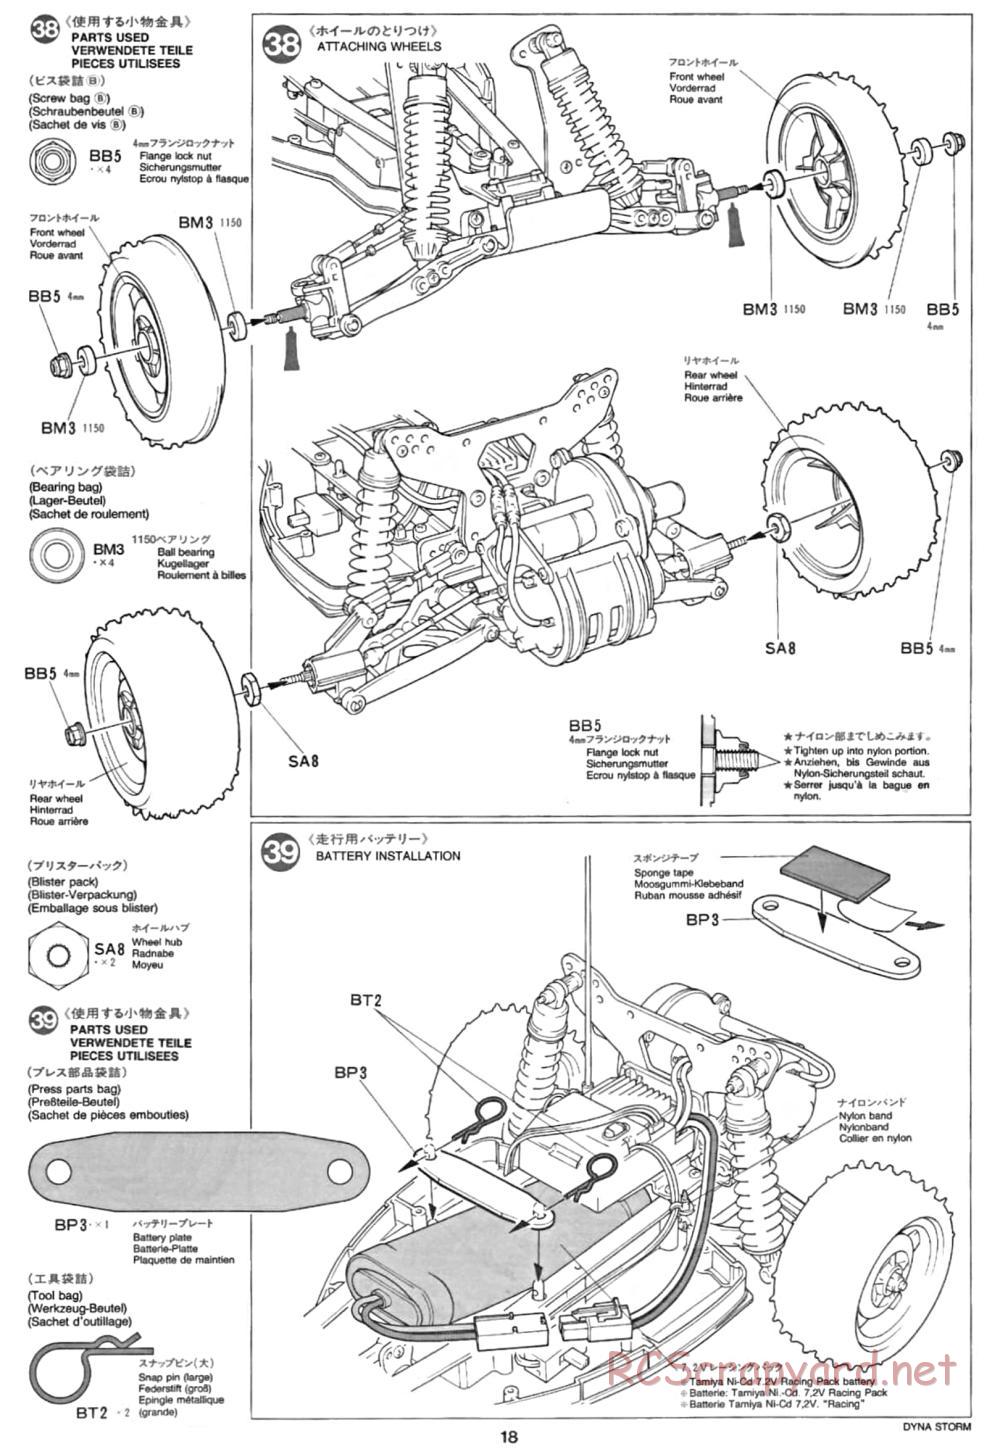 Tamiya - Dyna Storm Chassis - Manual - Page 18